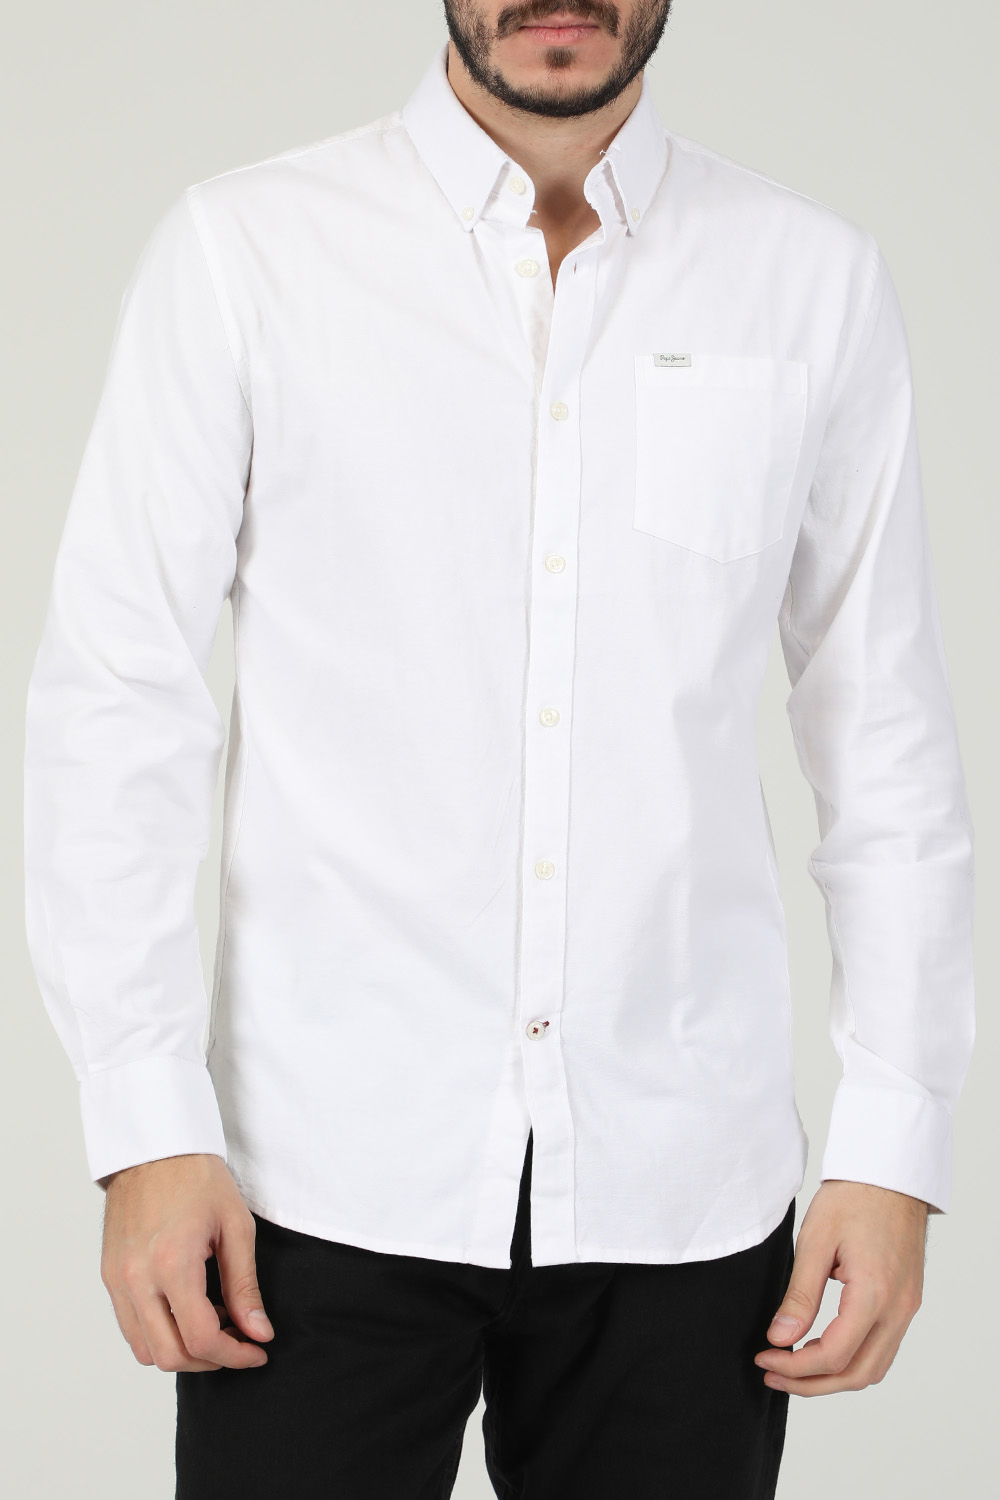 PEPE JEANS – Ανδρικό πουκάμισο PEPE JEANS JACKSON λευκό 1822920.0-0091